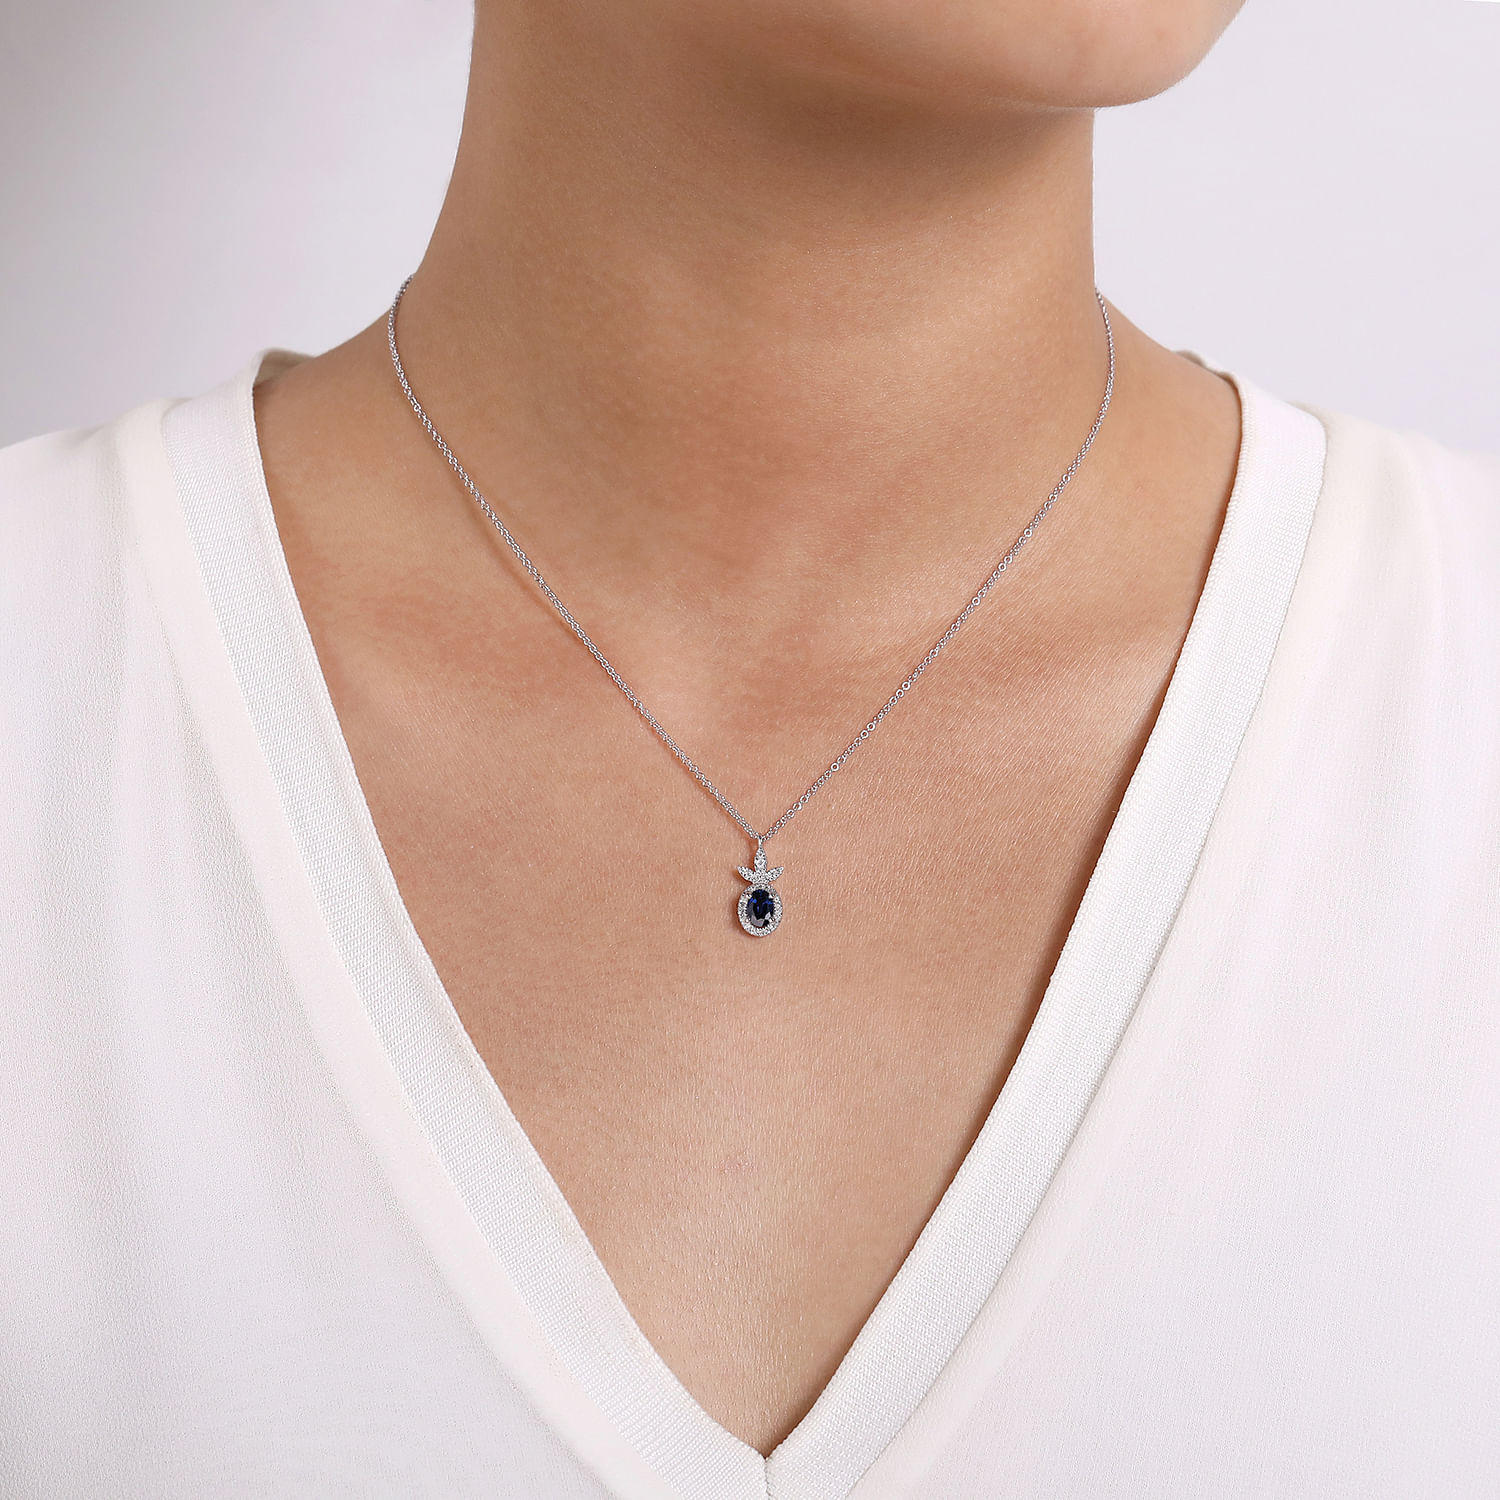 14K White Gold Diamond and Sapphire Pendant Necklace